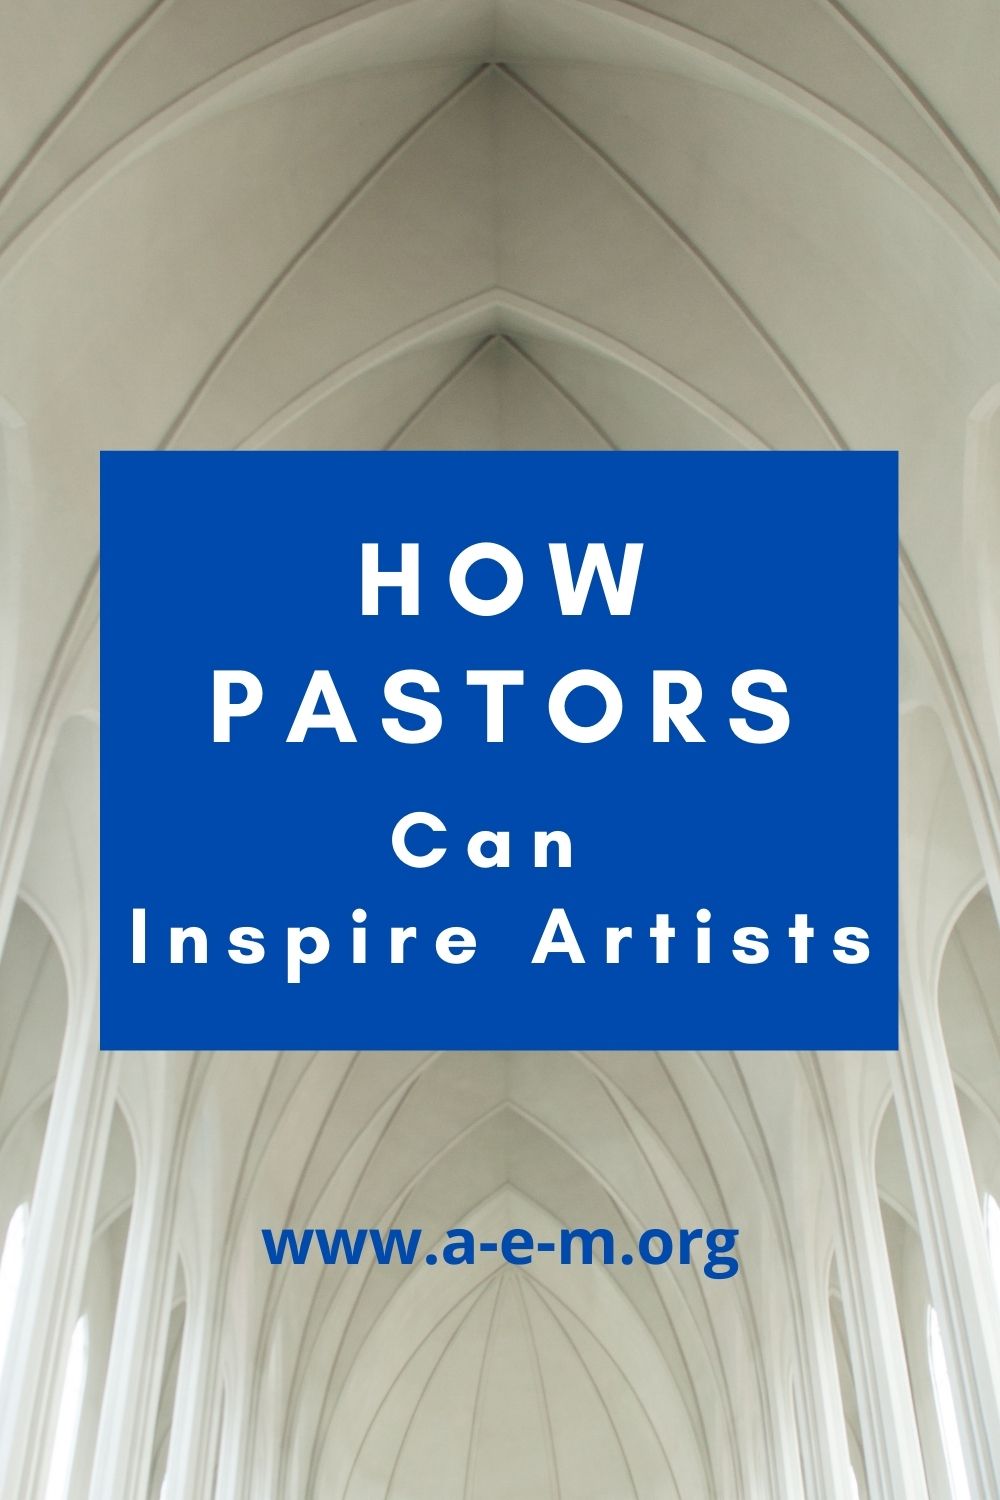 how pastors can inspire artists